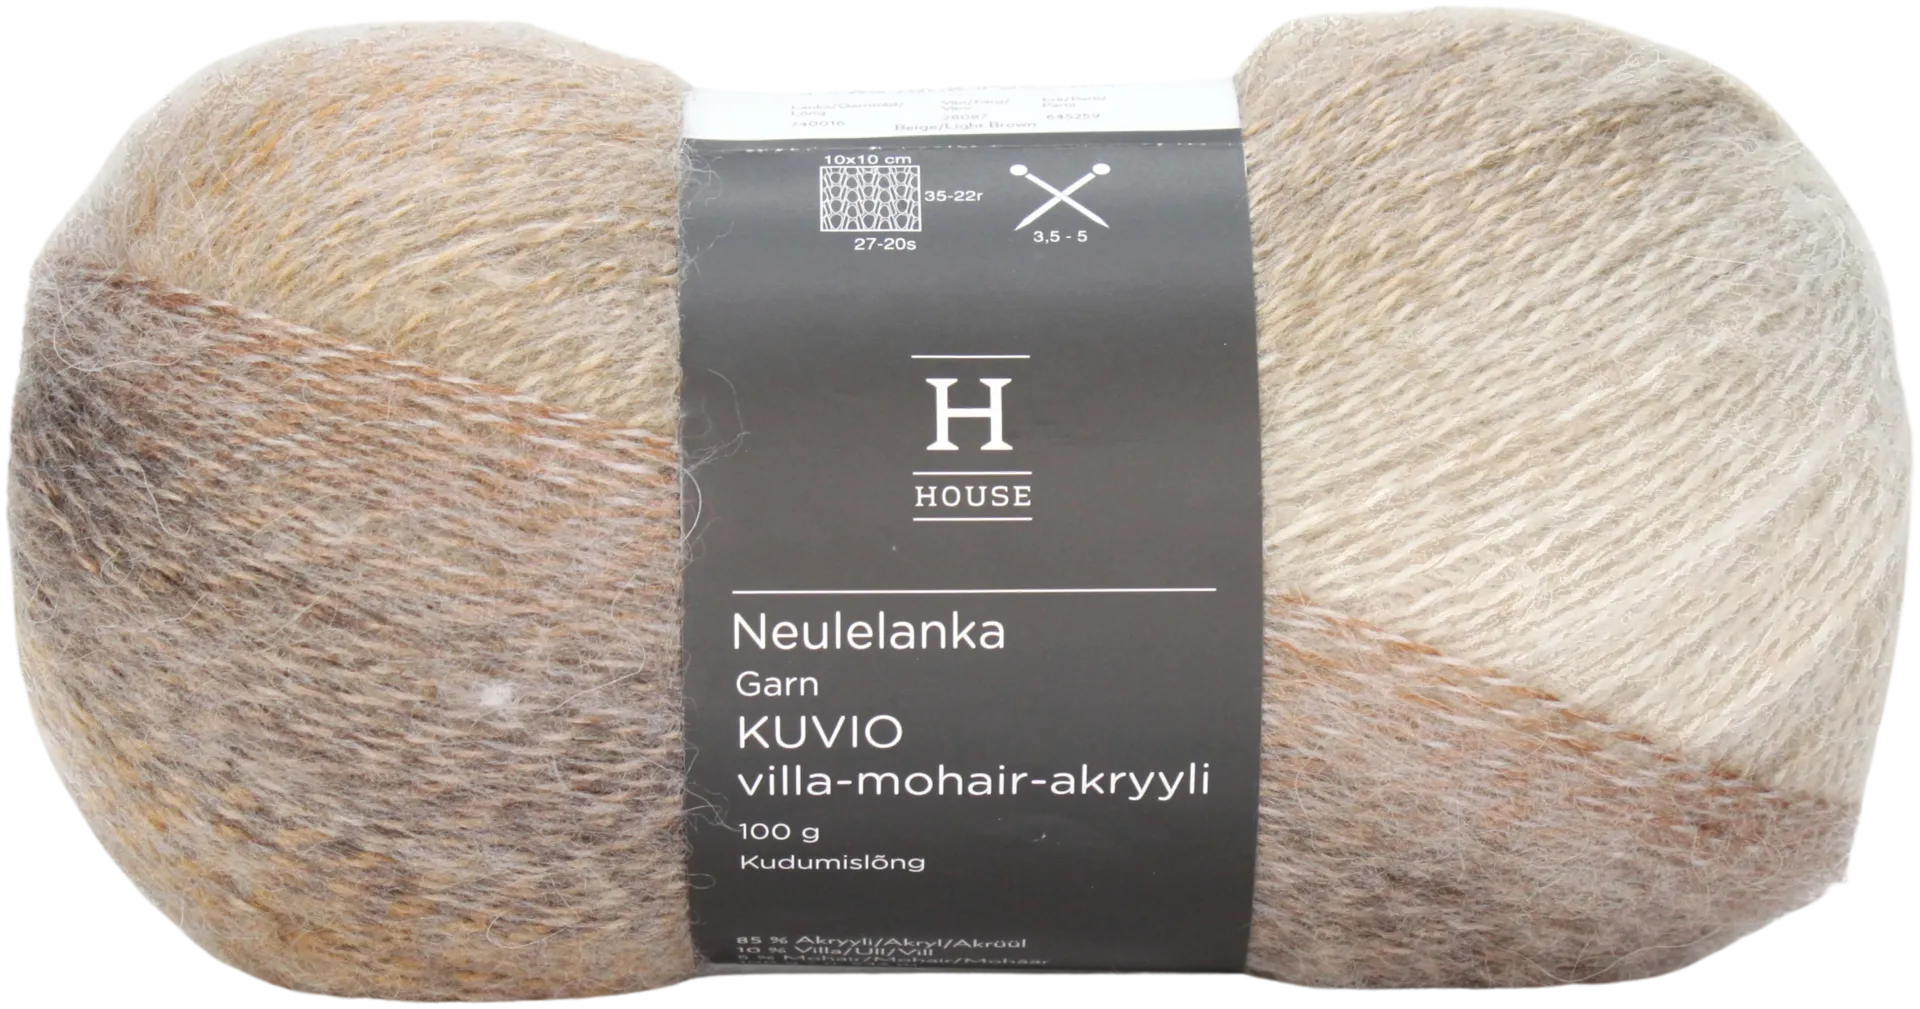 House neulelanka Kuviot villa-mohair-akryyli 100 g Beige/light brown 28087 - 1